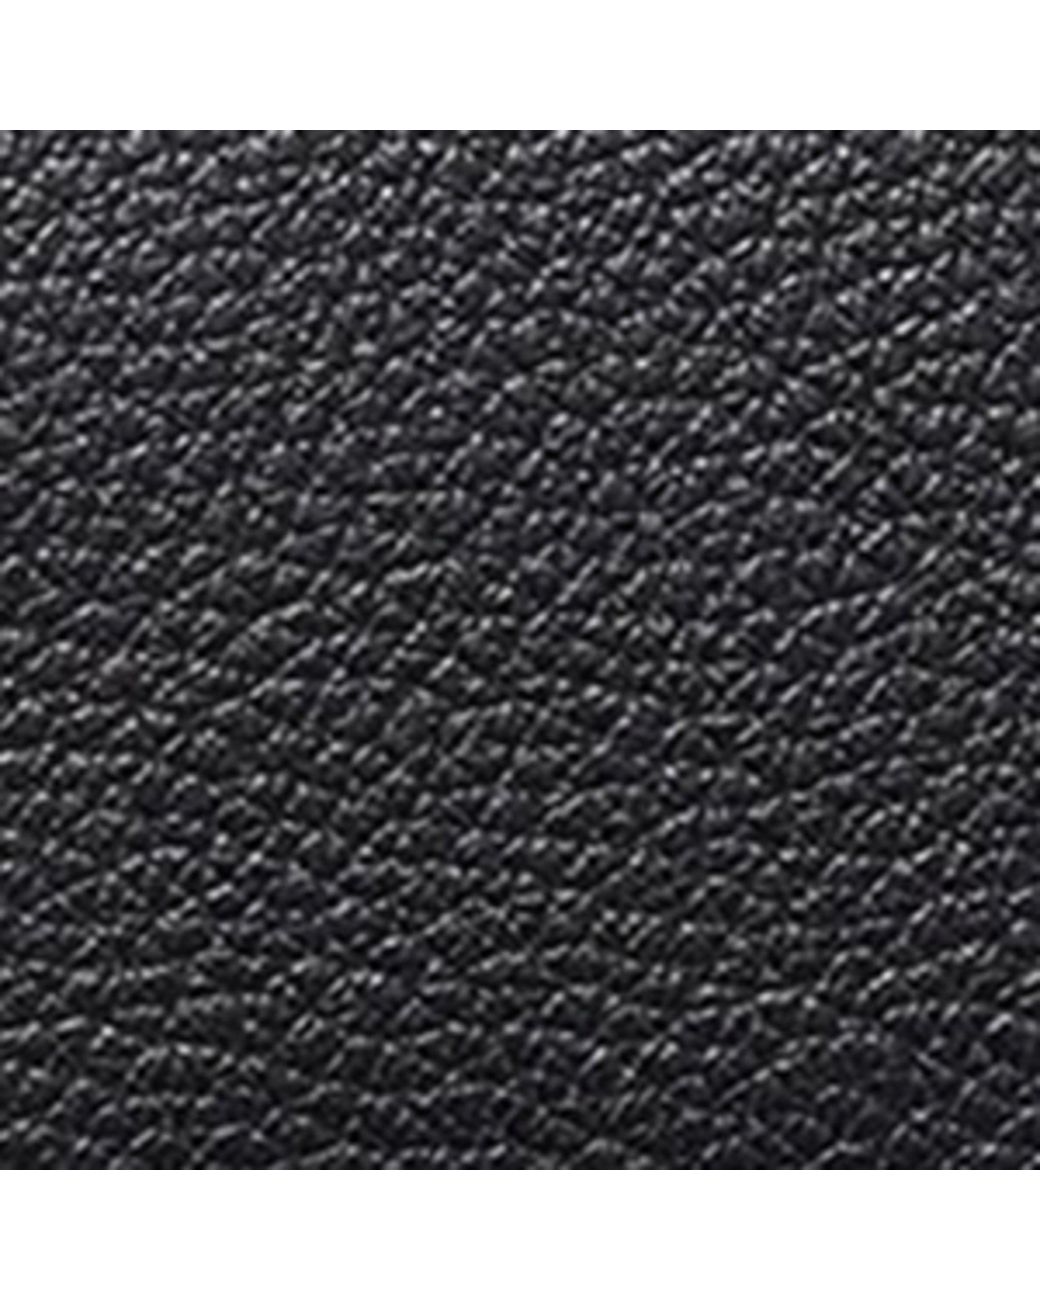 Jimmy Choo Leather Madeline Cross-body Bag in Black | Lyst